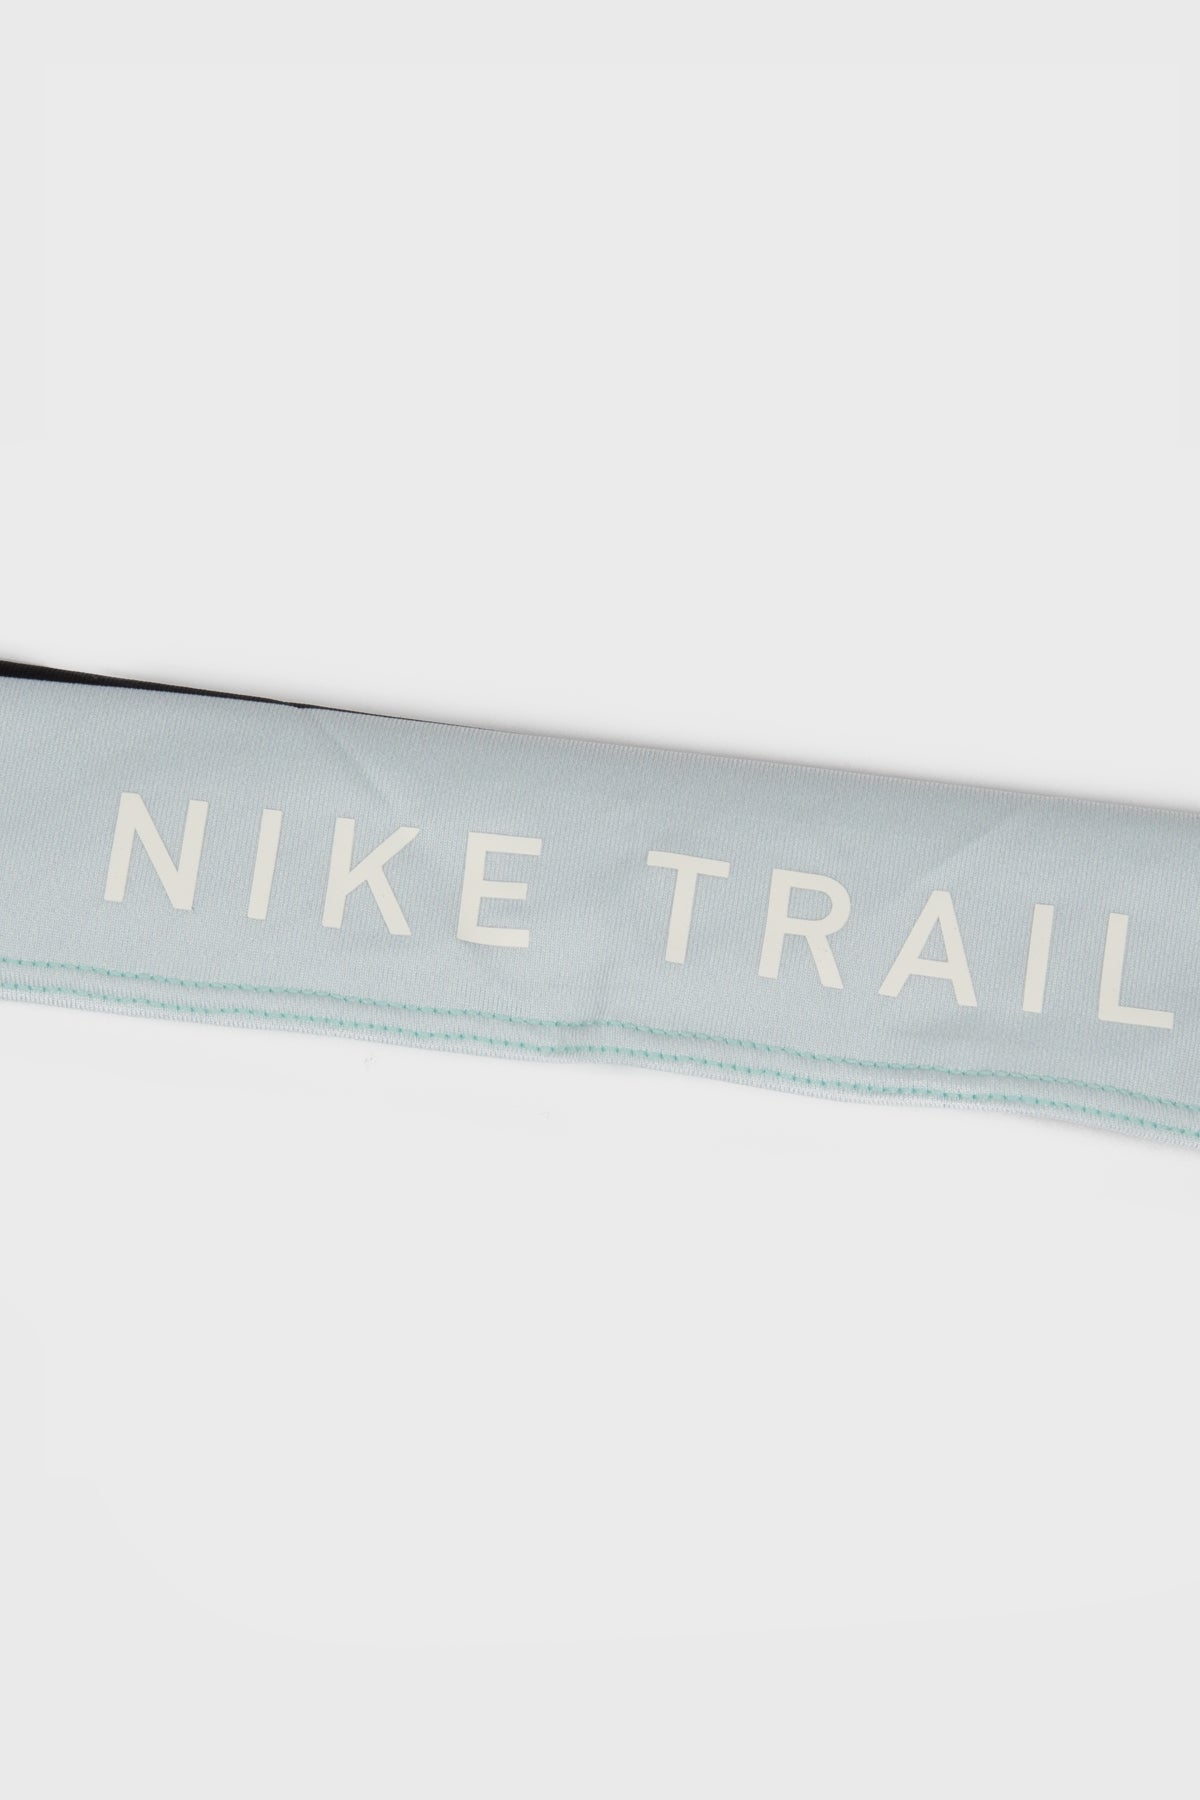 Nike - Trail Cooling bandana